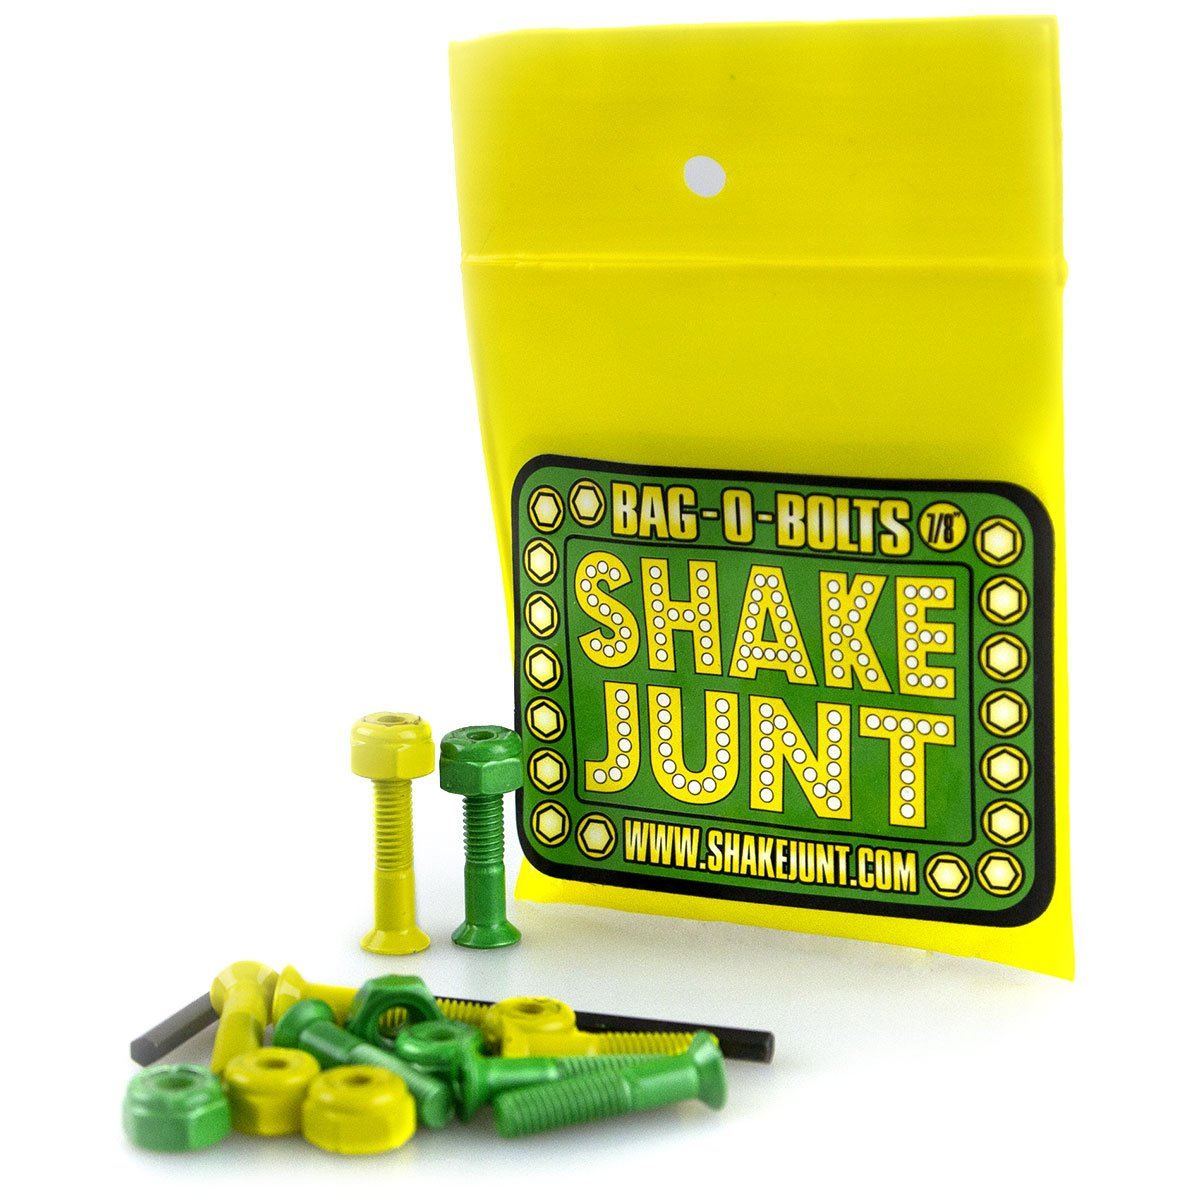 Shake Junt Bag-o-Bolts All Green/Yellow Hardware Phillips 7/8 hardware Shake Junt 